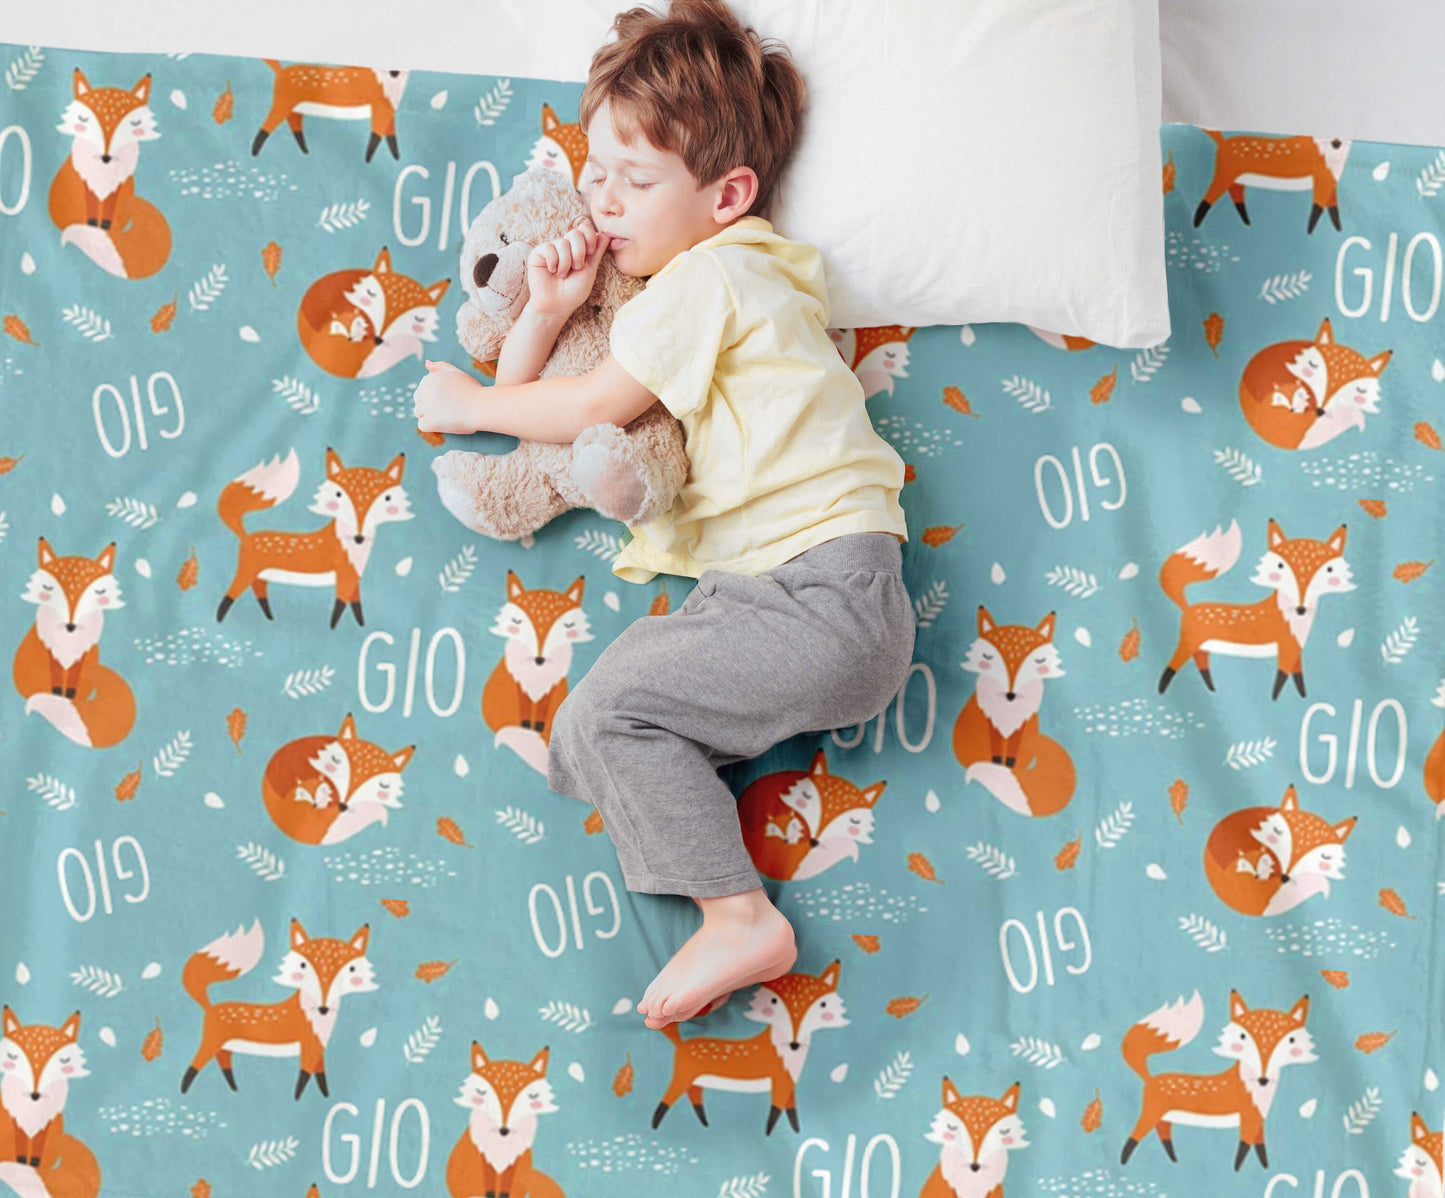 Fox Pattern Design personalize blanket, Minky or Sherpa custom blanket, Baby blanket, birthday gift idea